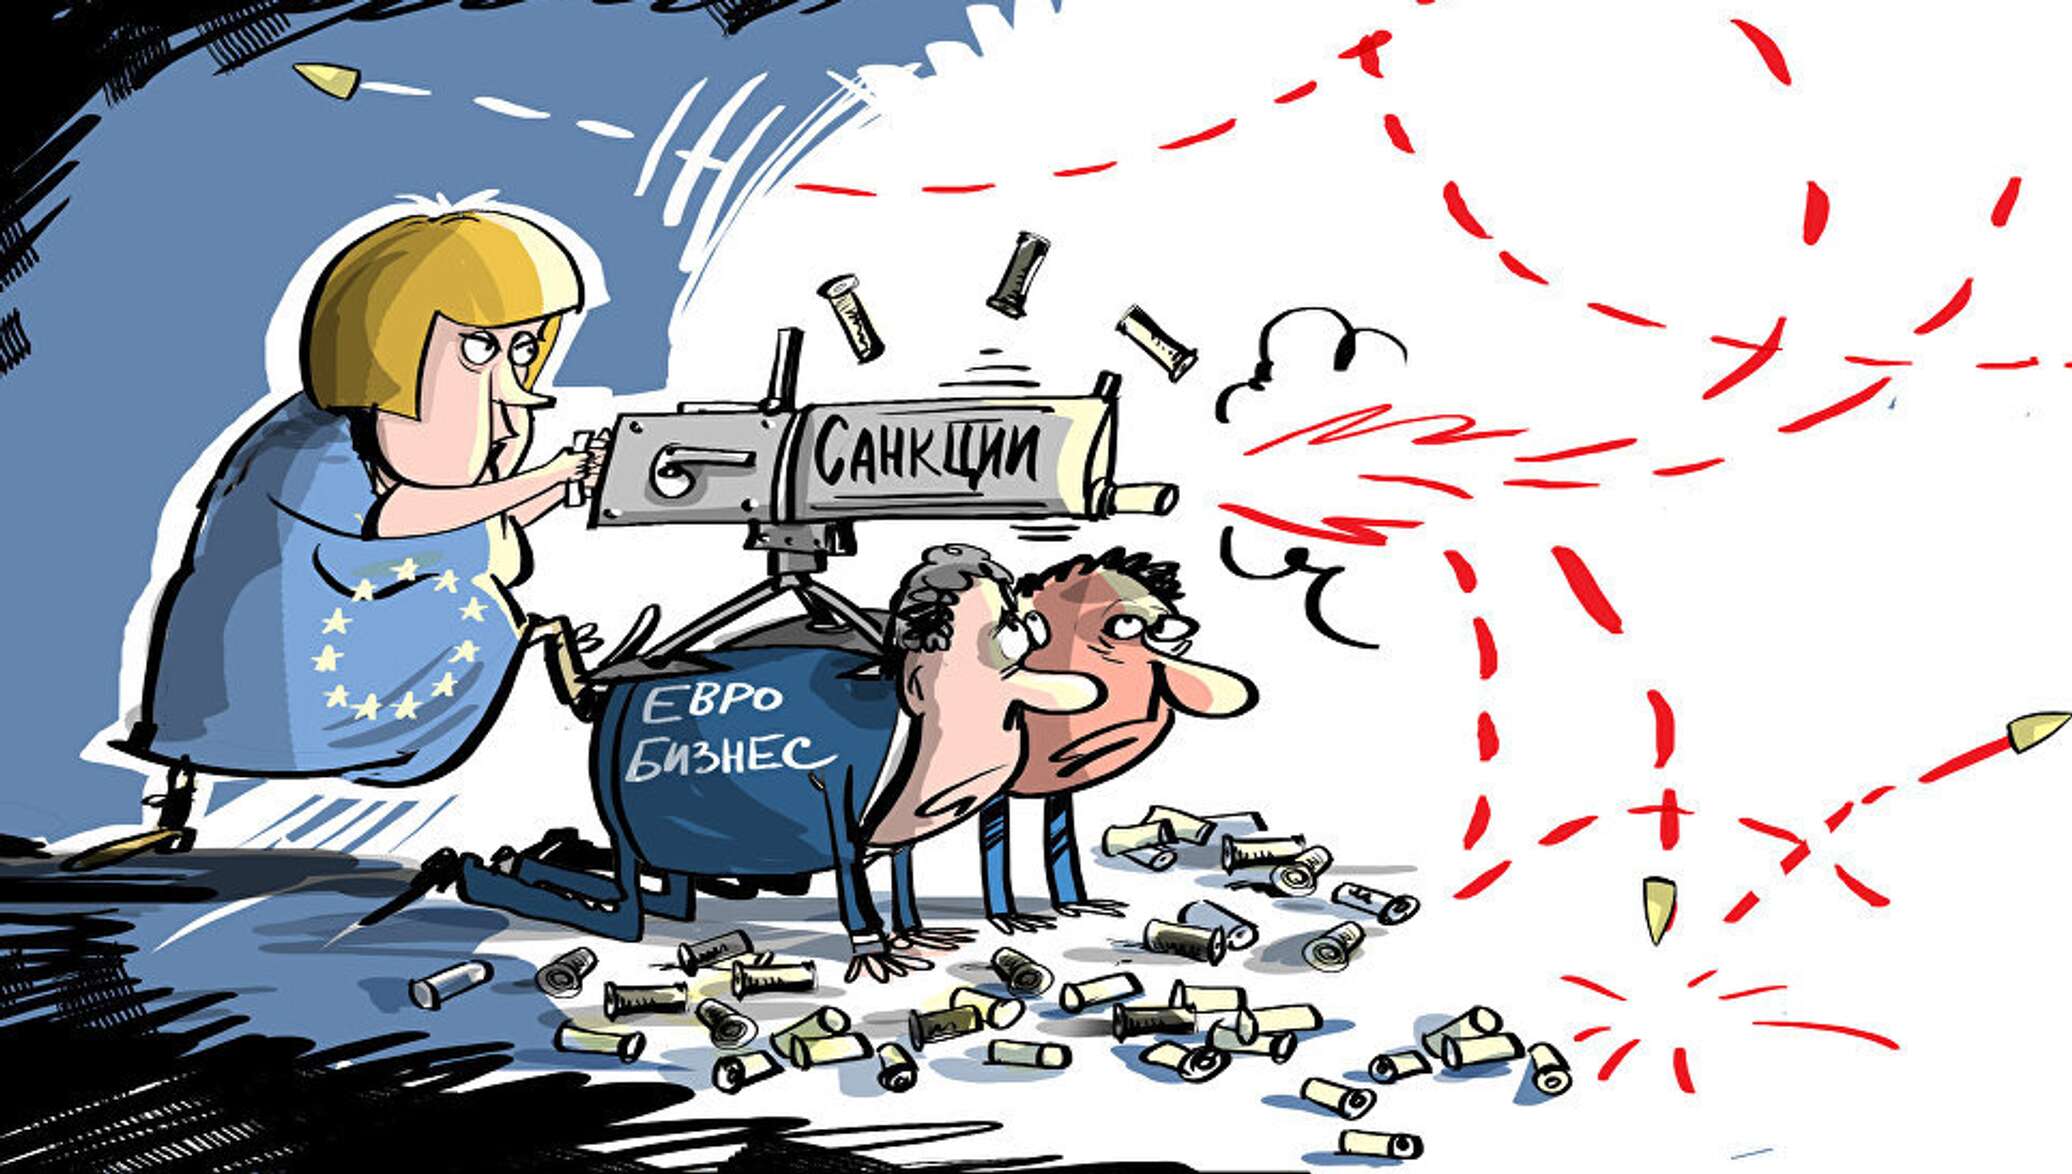 Санкции против человека. Карикатура на ЕС. Санкции карикатура. Санкции ЕС карикатура. Санкции рисунок.